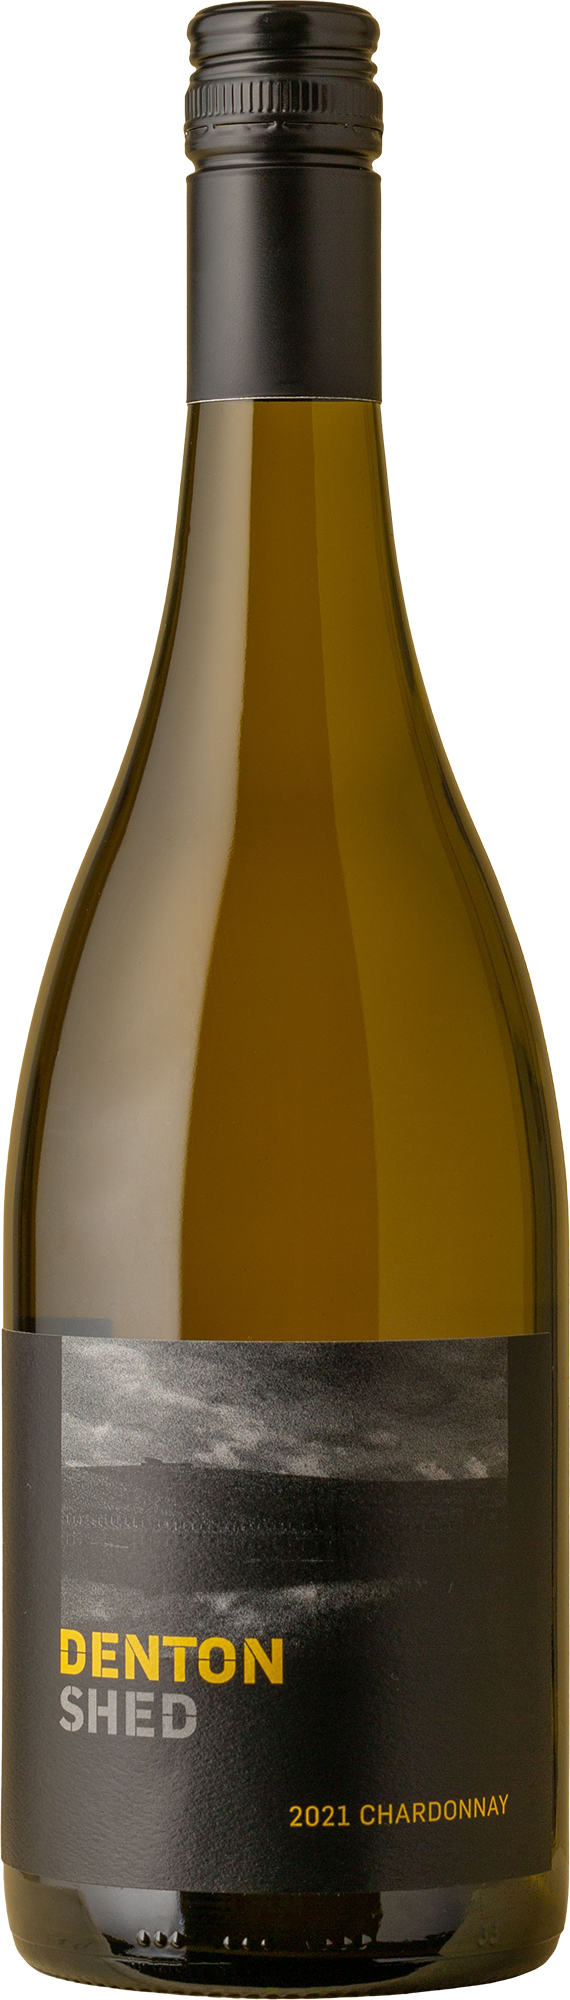 Denton - Shed Chardonnay 2021